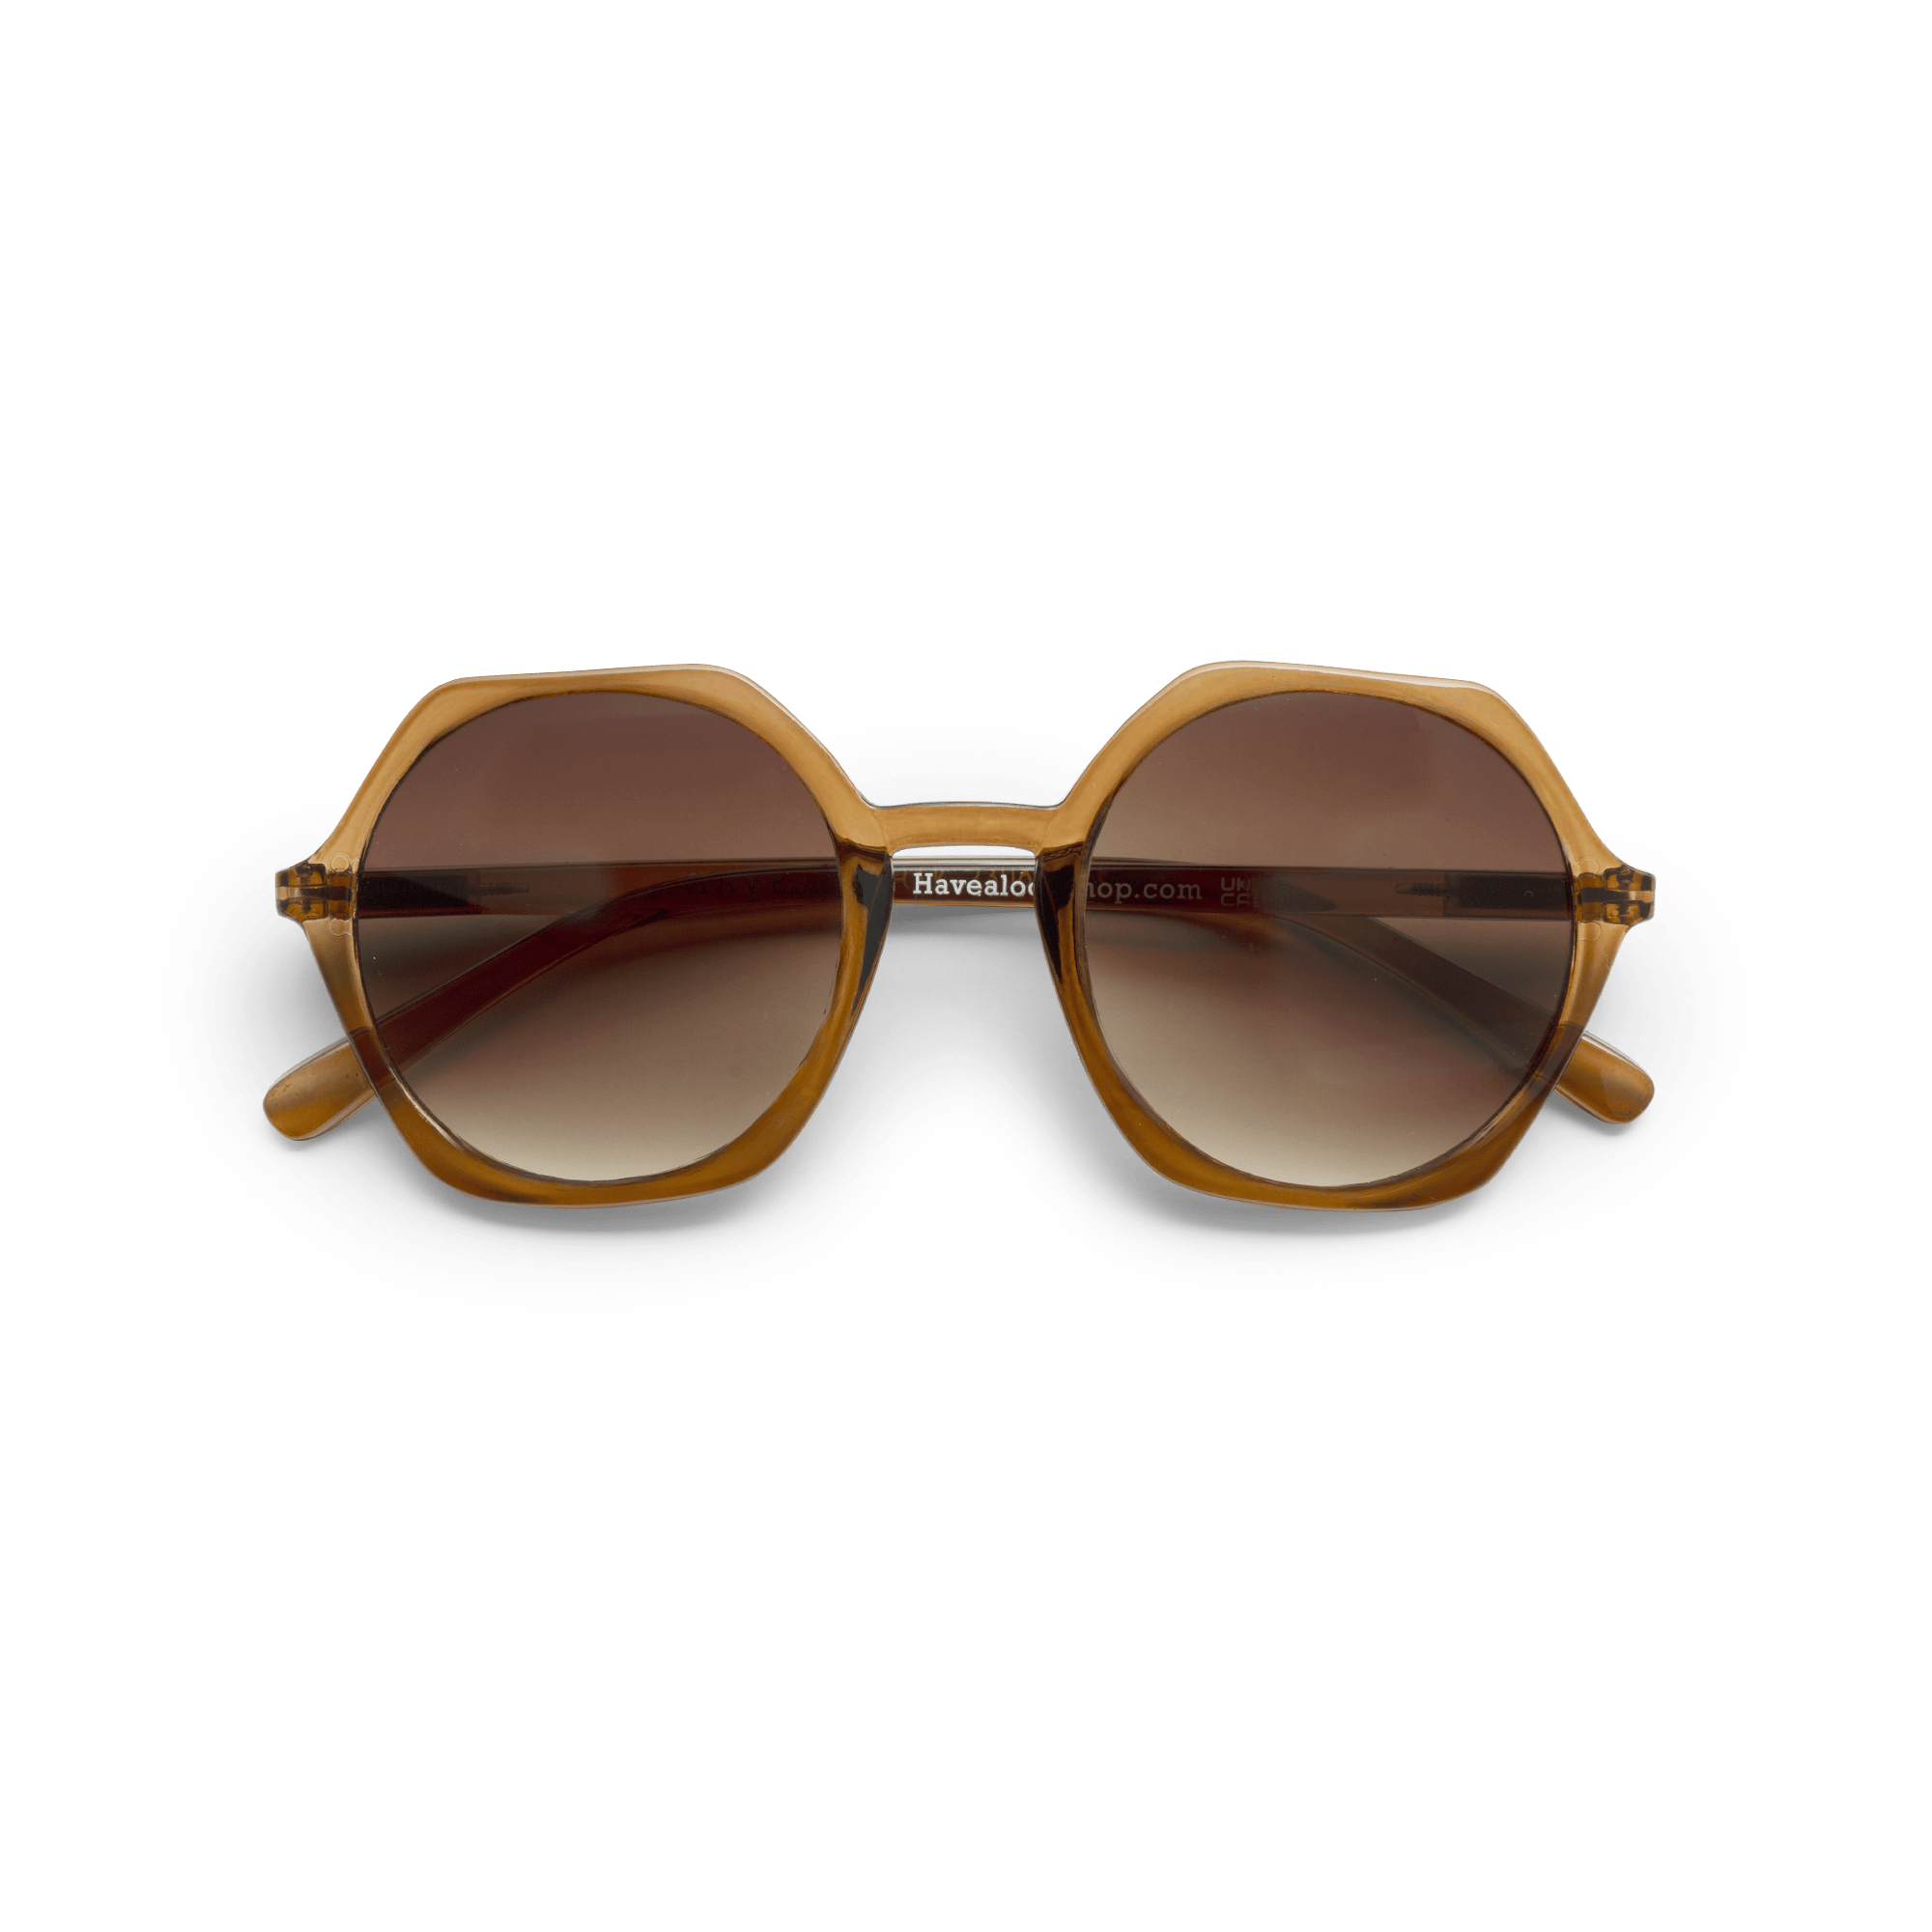 Minus-solbriller Edgy - brown